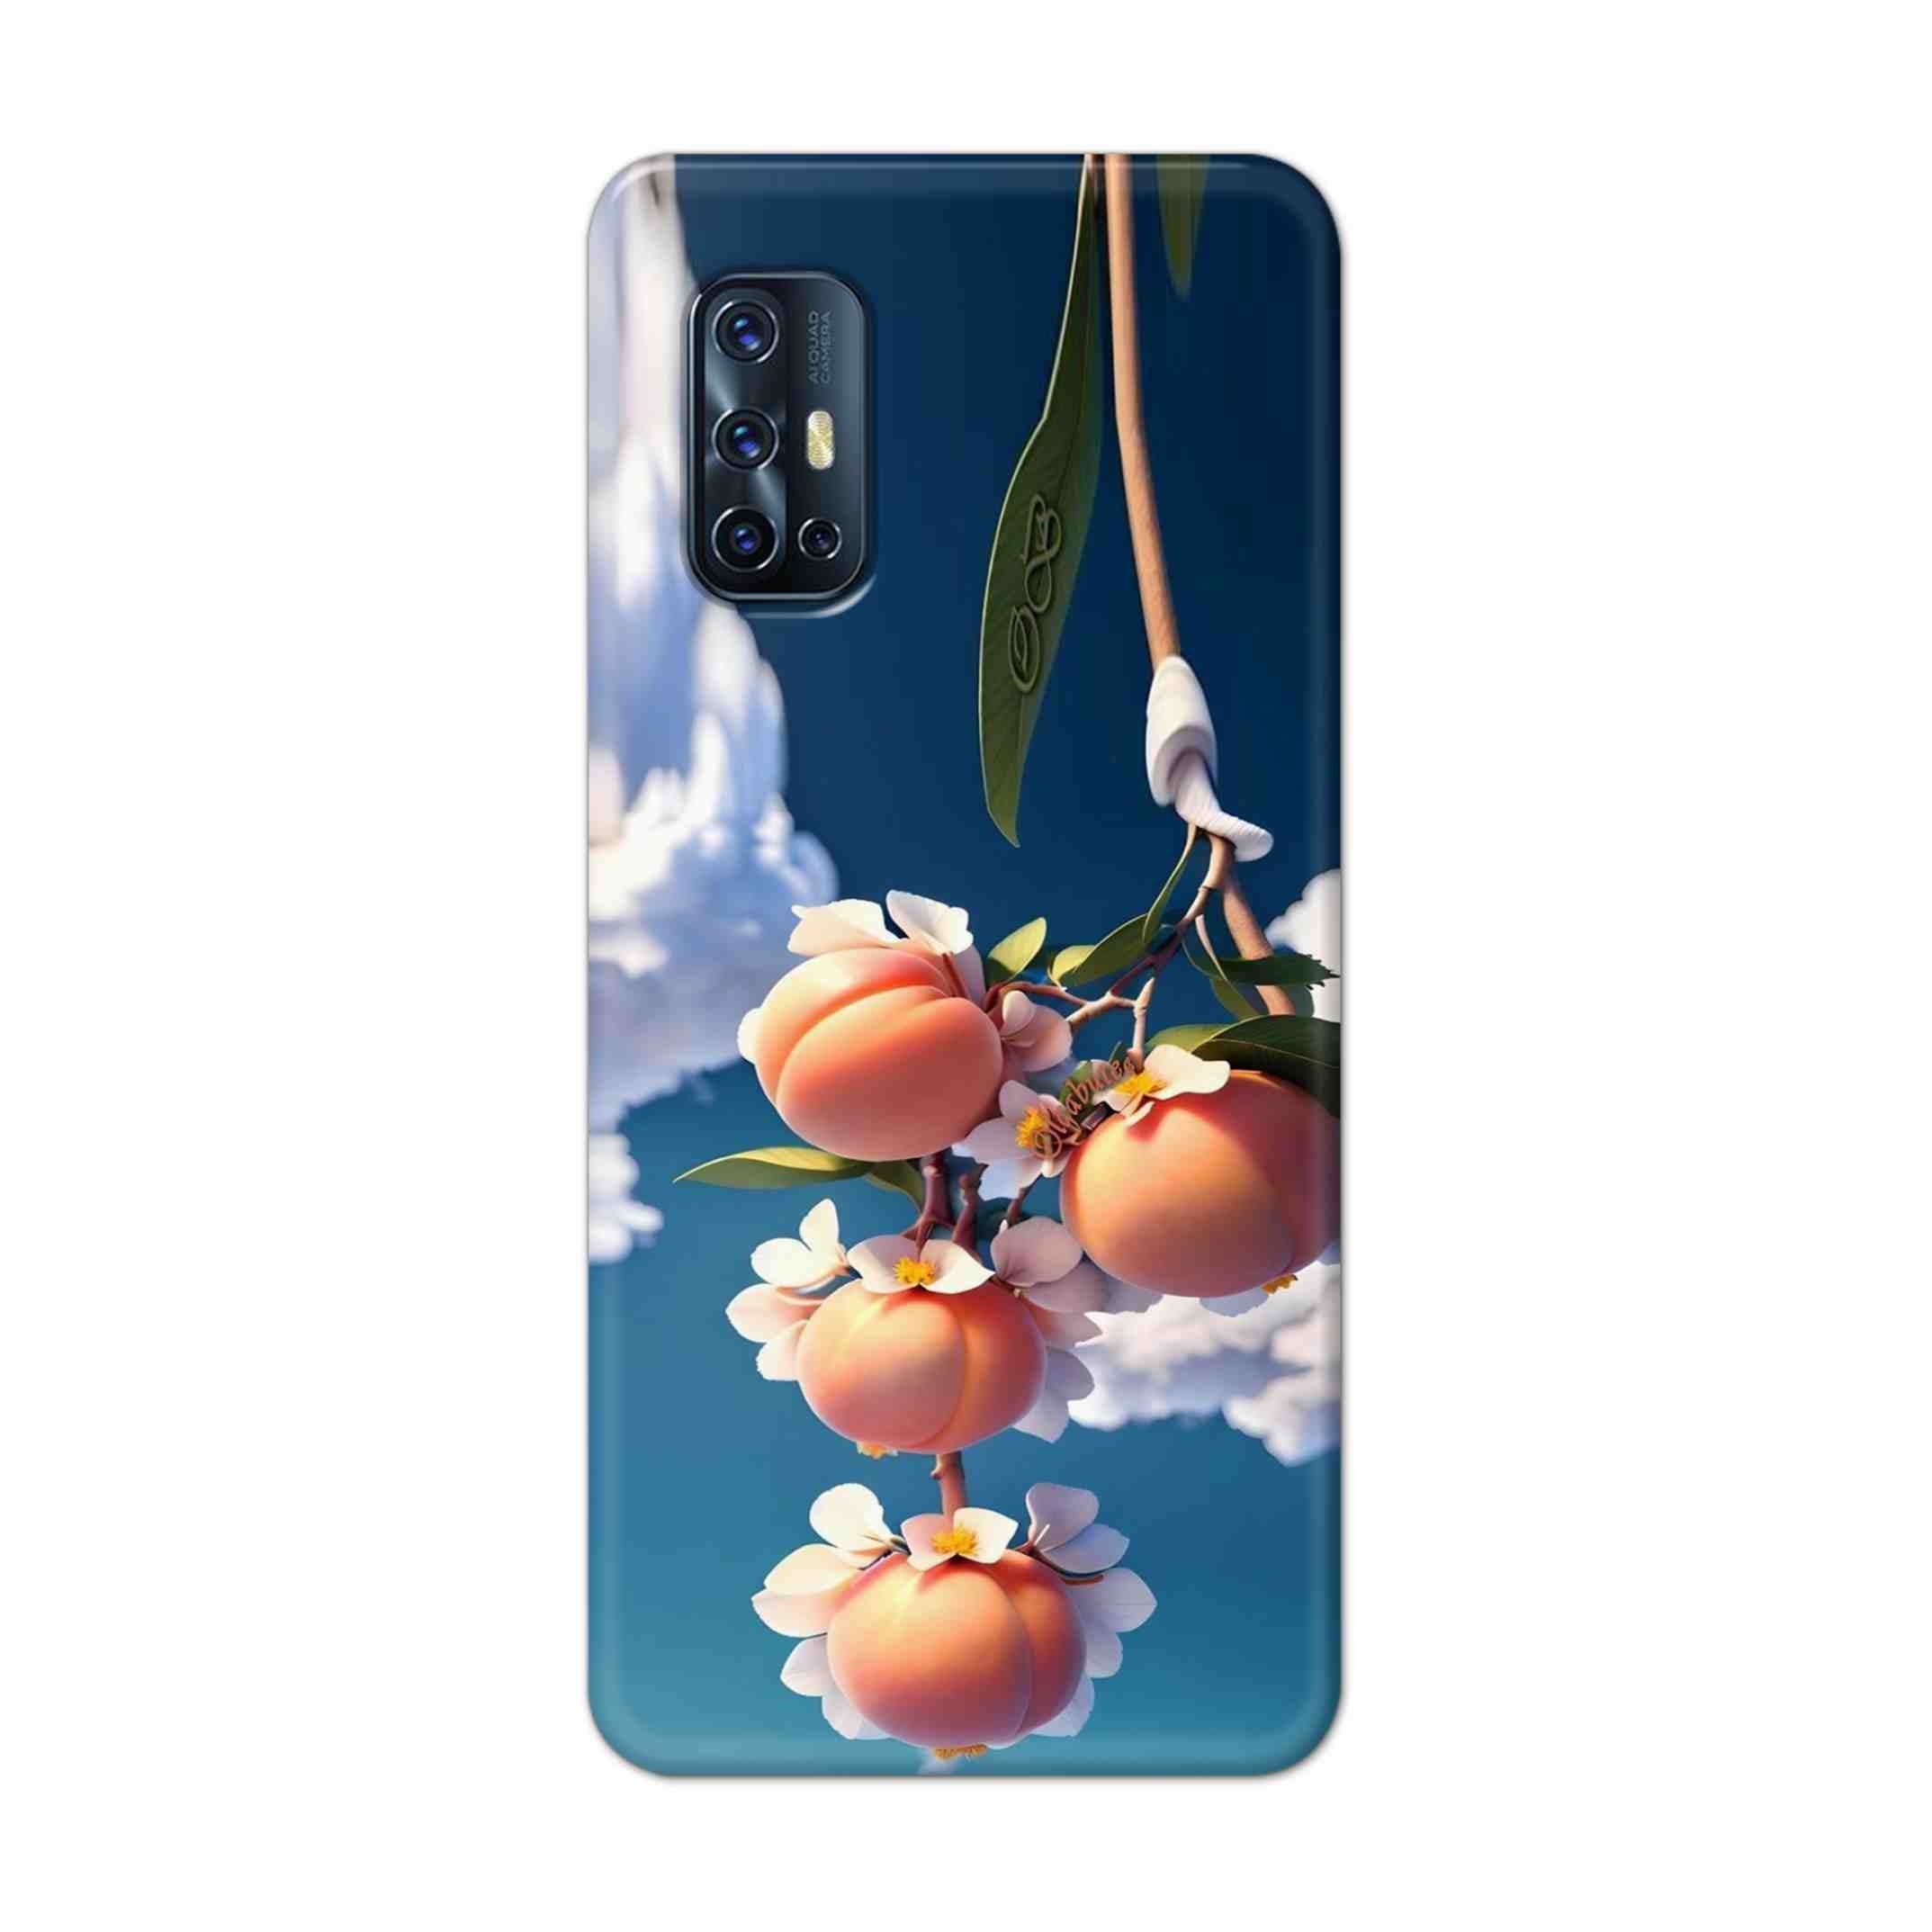 Buy Fruit Hard Back Mobile Phone Case Cover For Vivo V17 Online